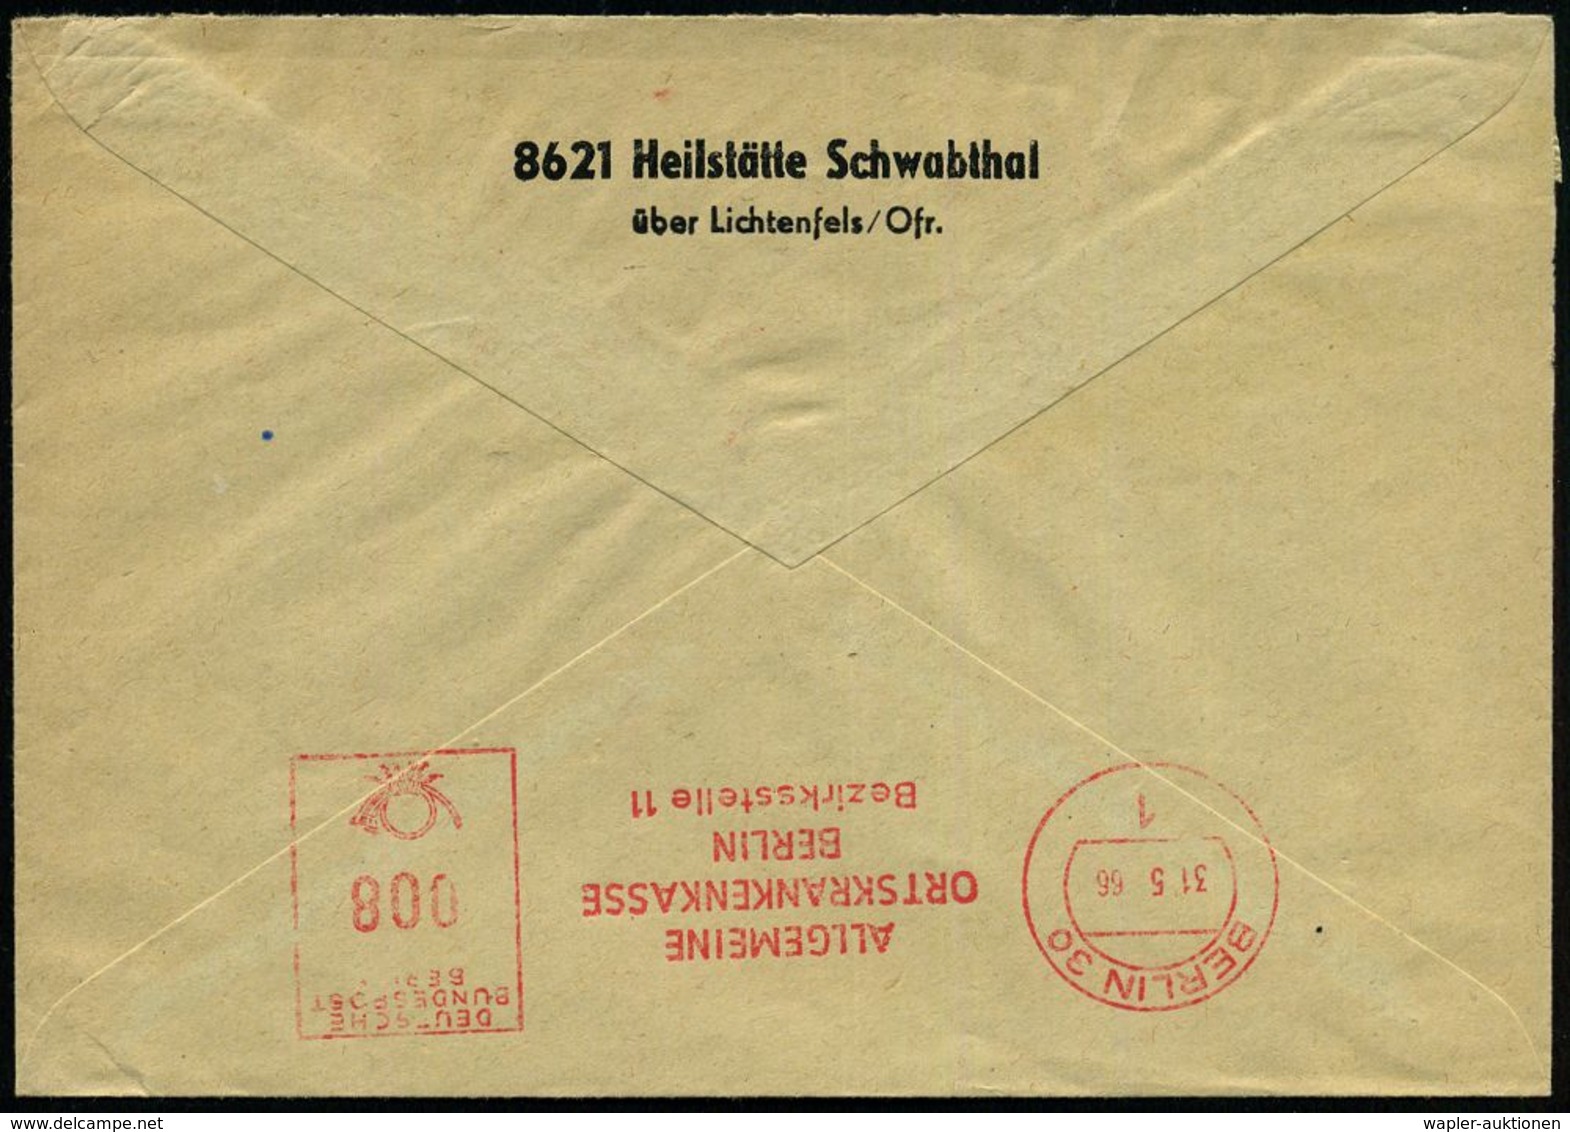 8621 H E I L S T Ä T T E Schwabthal/ HEILSTÄTTE/ SCHWABTHAL OFR. 1966 (26.5.) AFS = Hauspostamt Heilanstalt (Abb.: Heils - Medizin